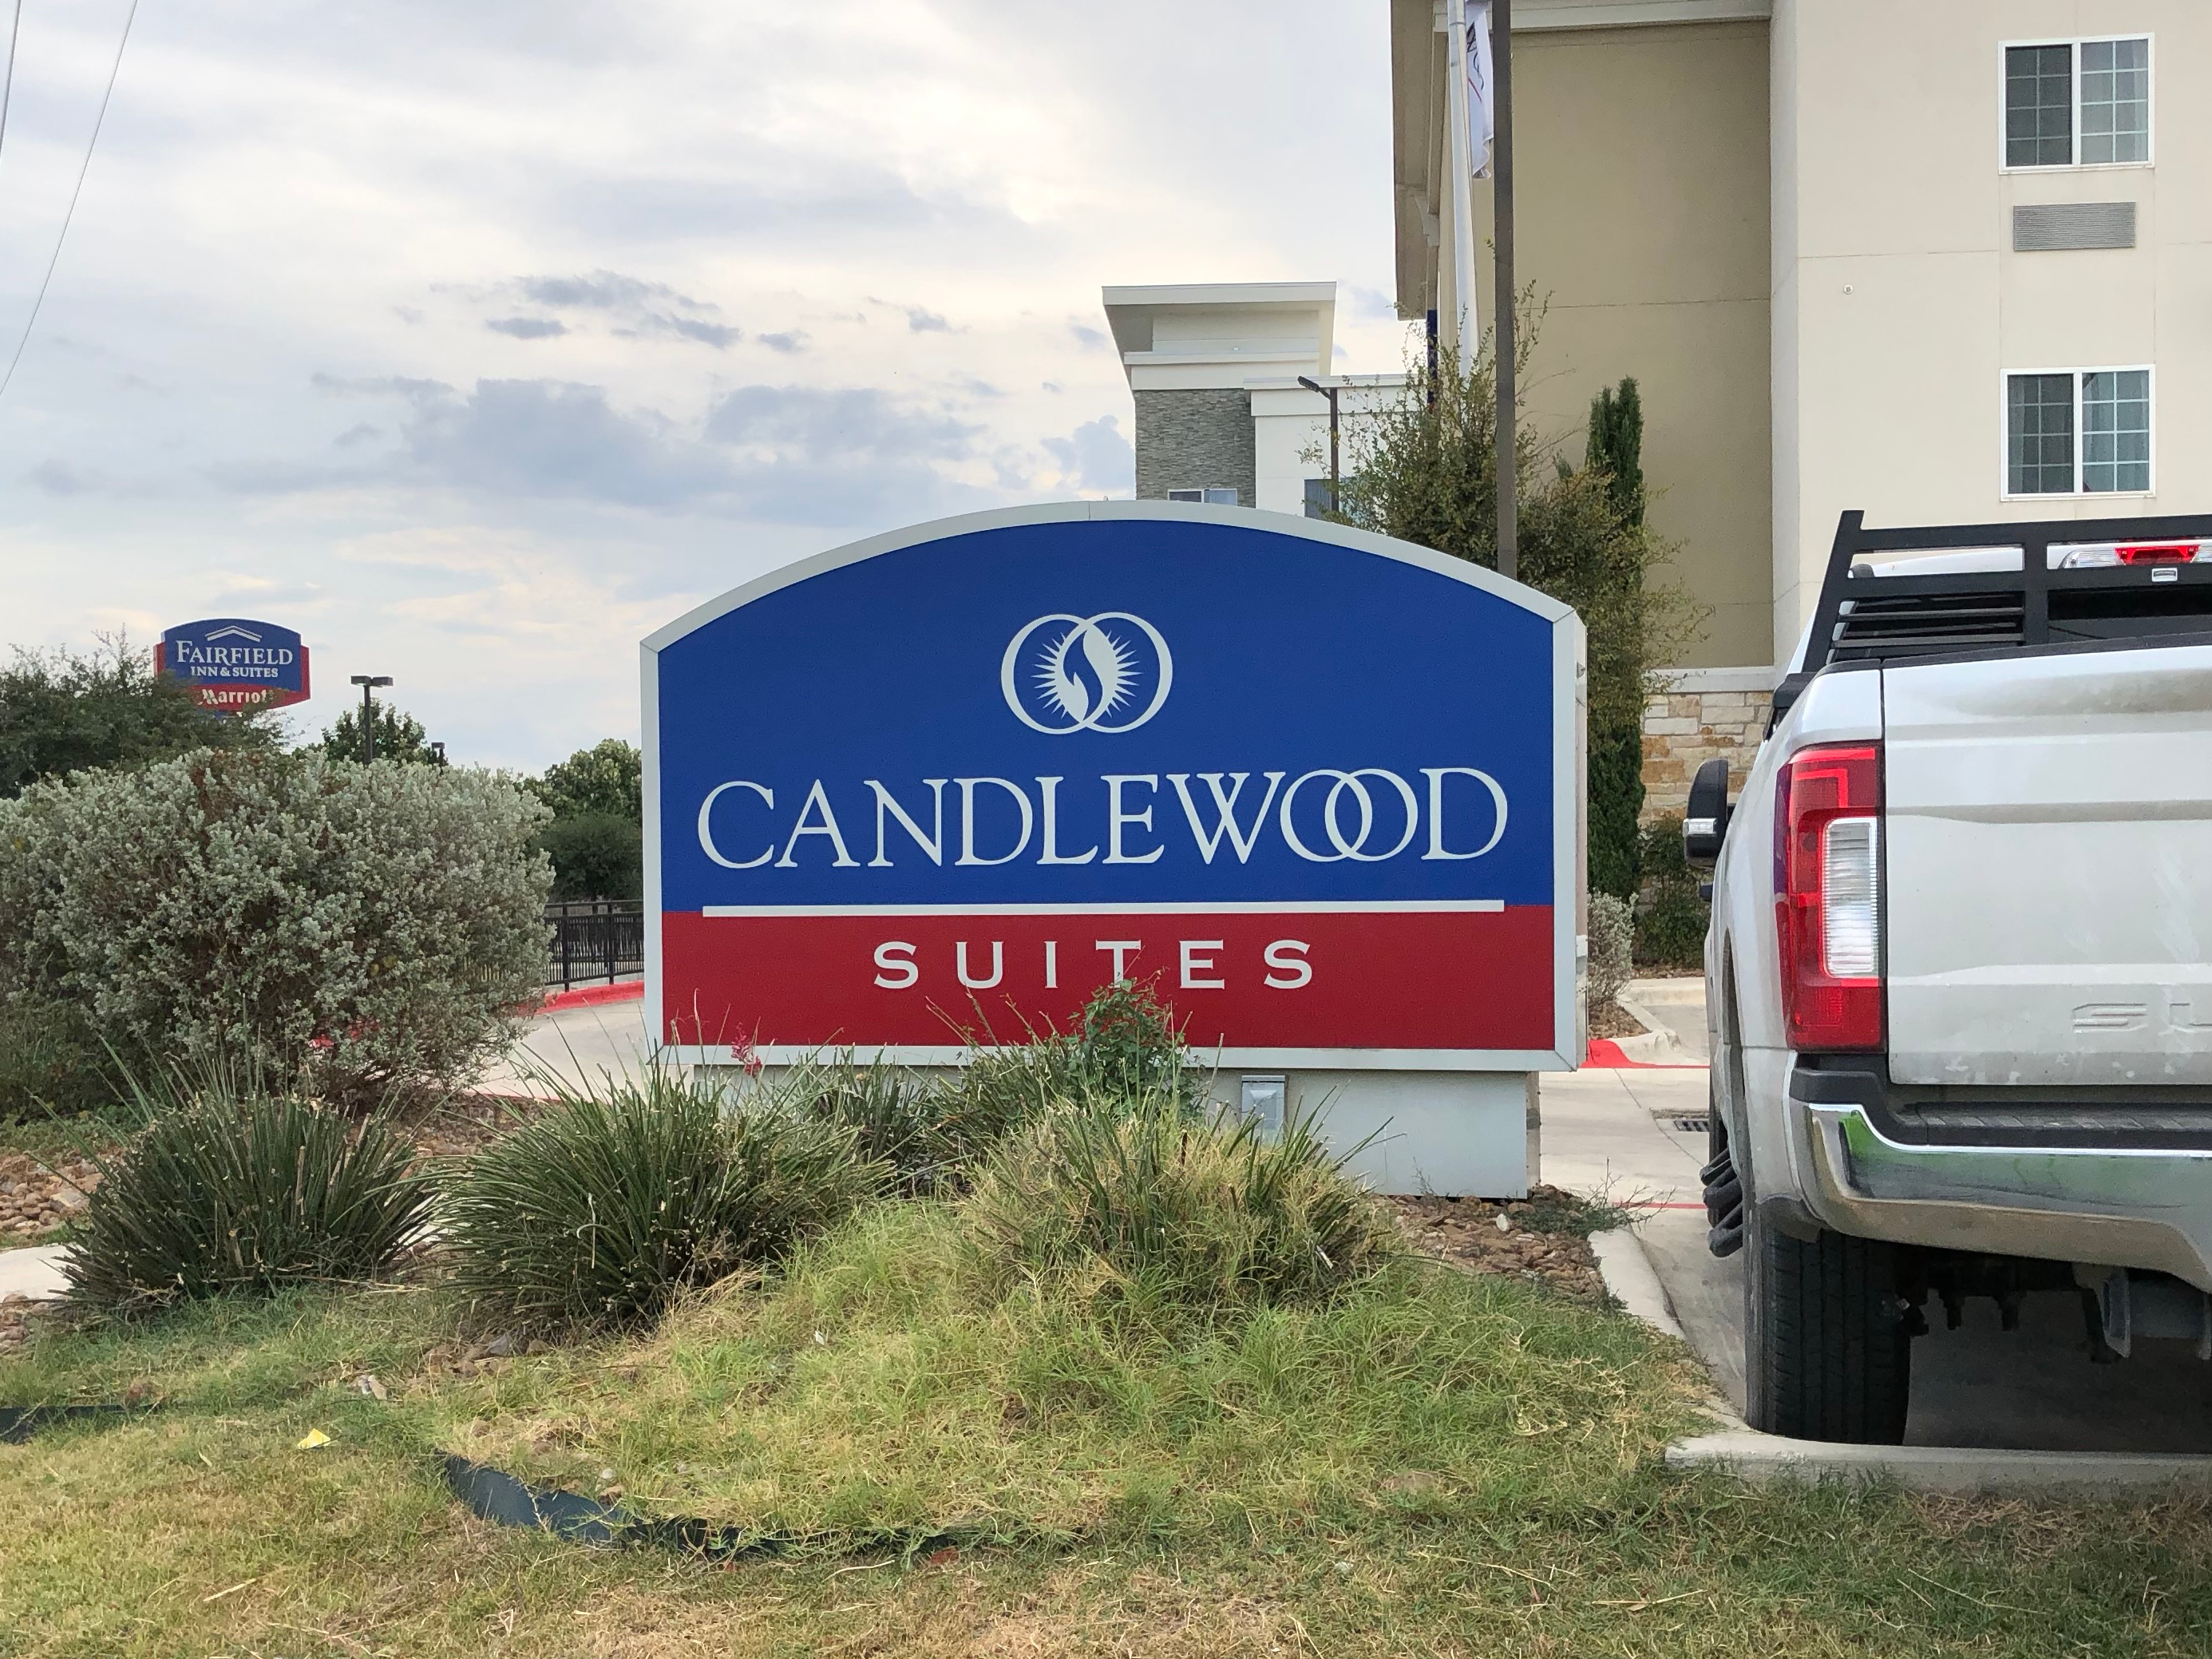 Candlewood Suites NB Sign.jpg